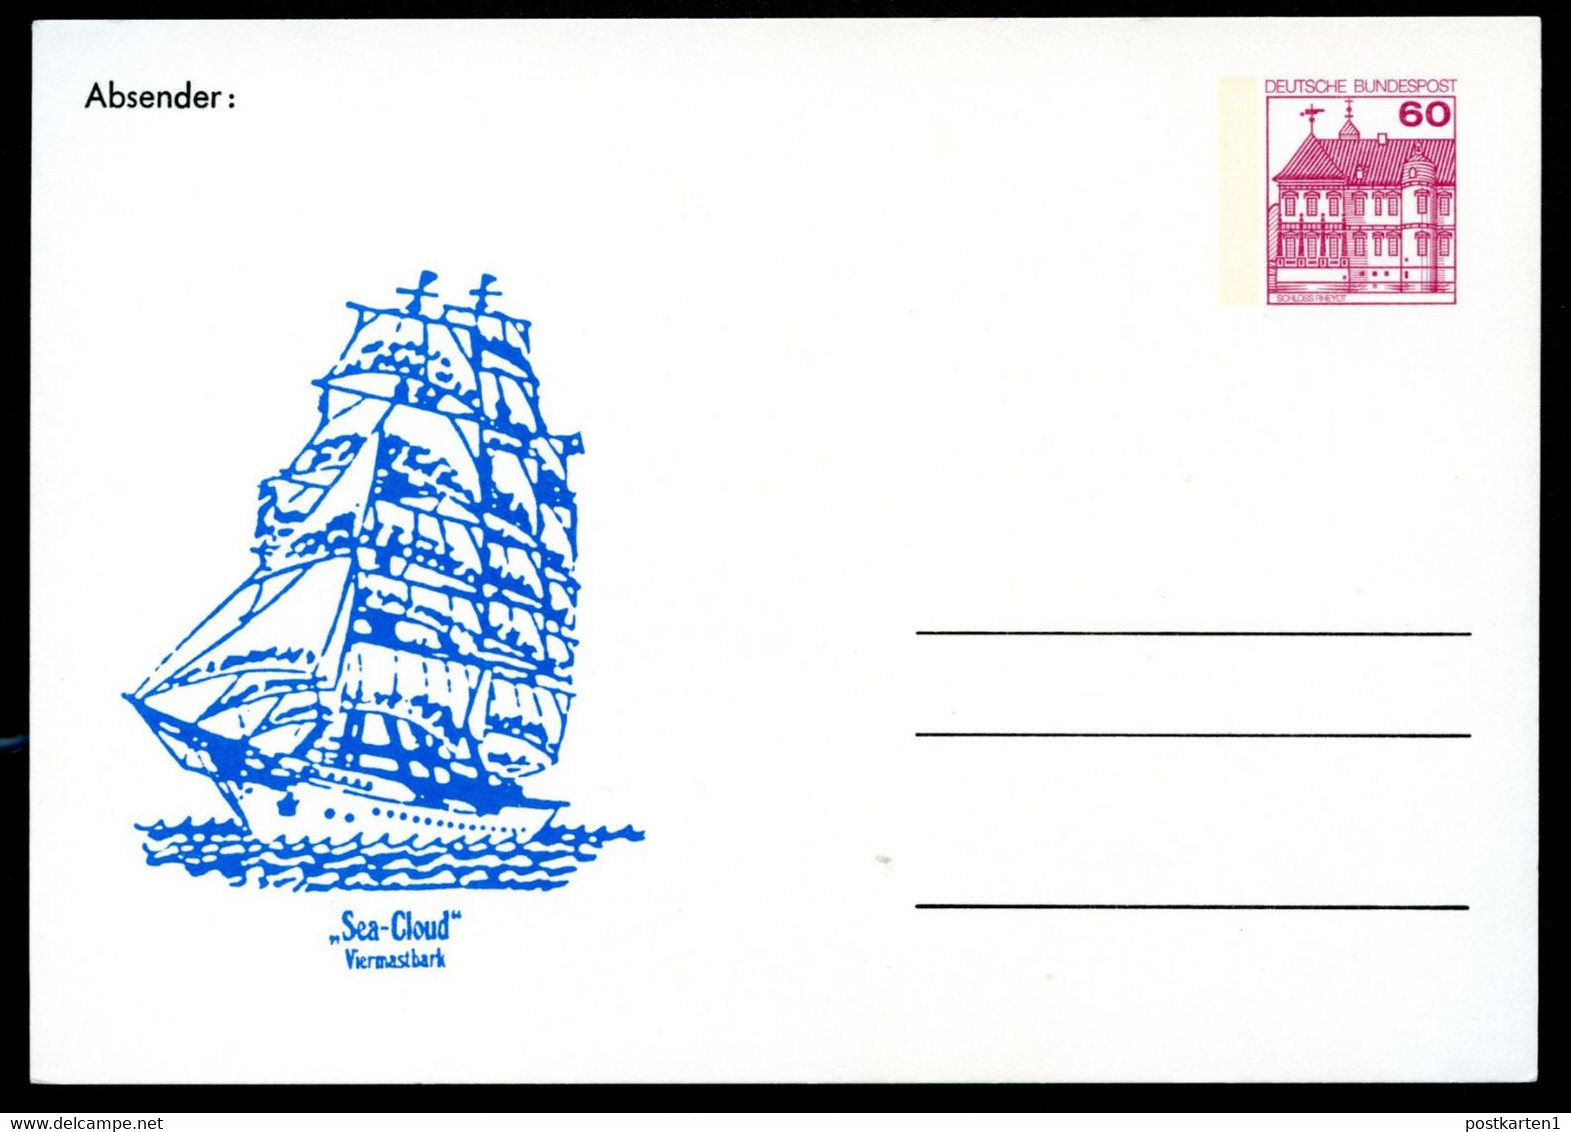 Bund PP106 B1/009 VIERMASTBARK "SEA-CLOUD" Kiel 1987 - Private Postcards - Mint